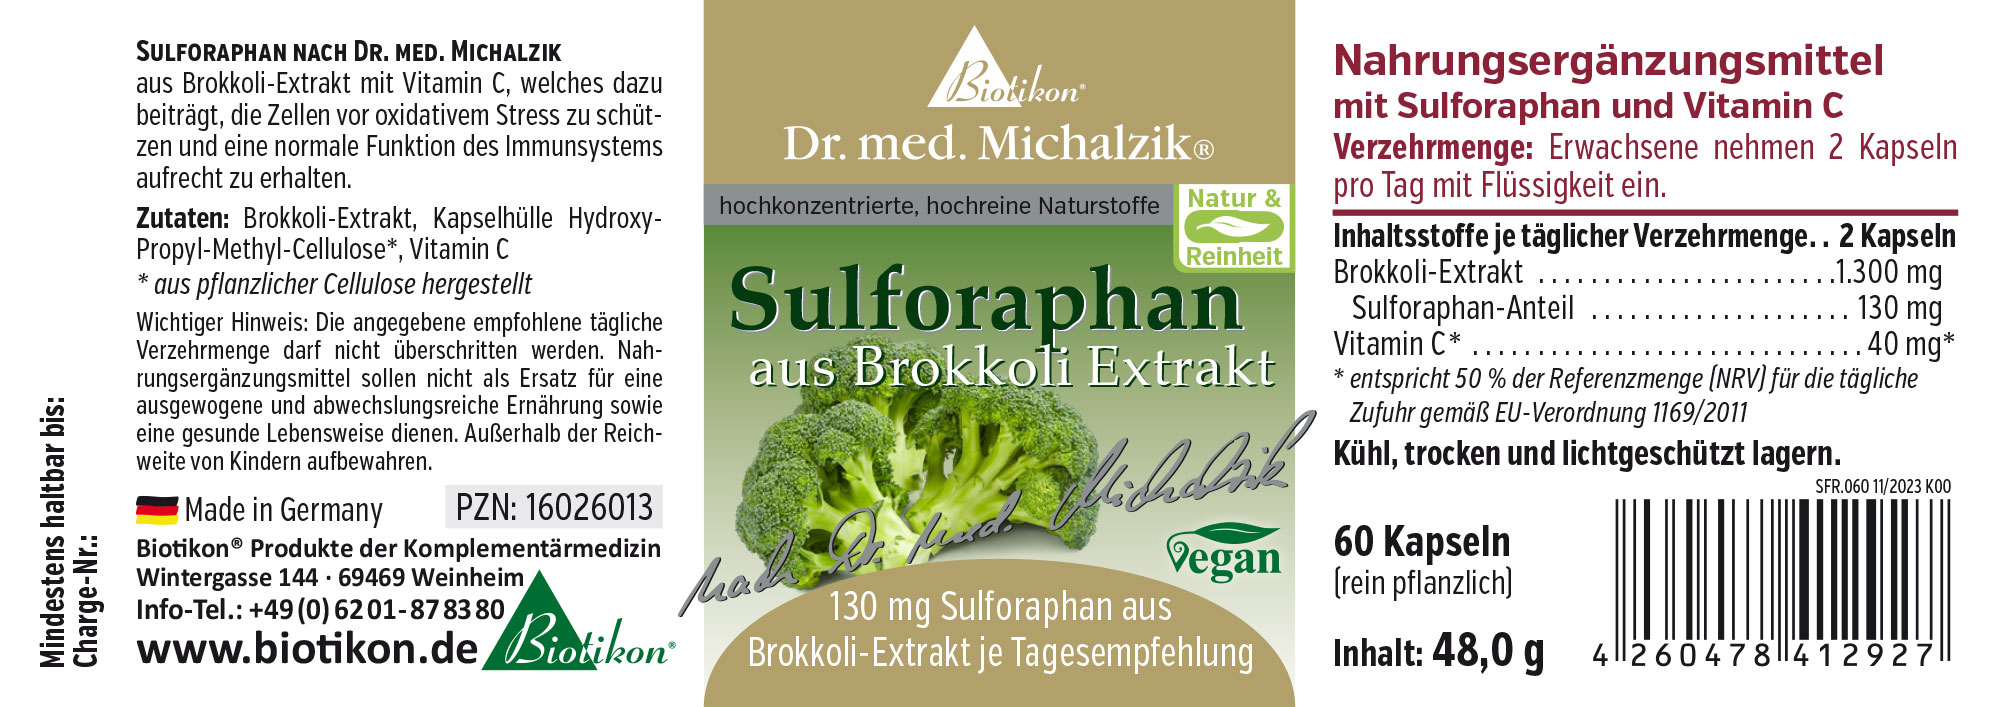 Sulforaphane from Broccoli Extract